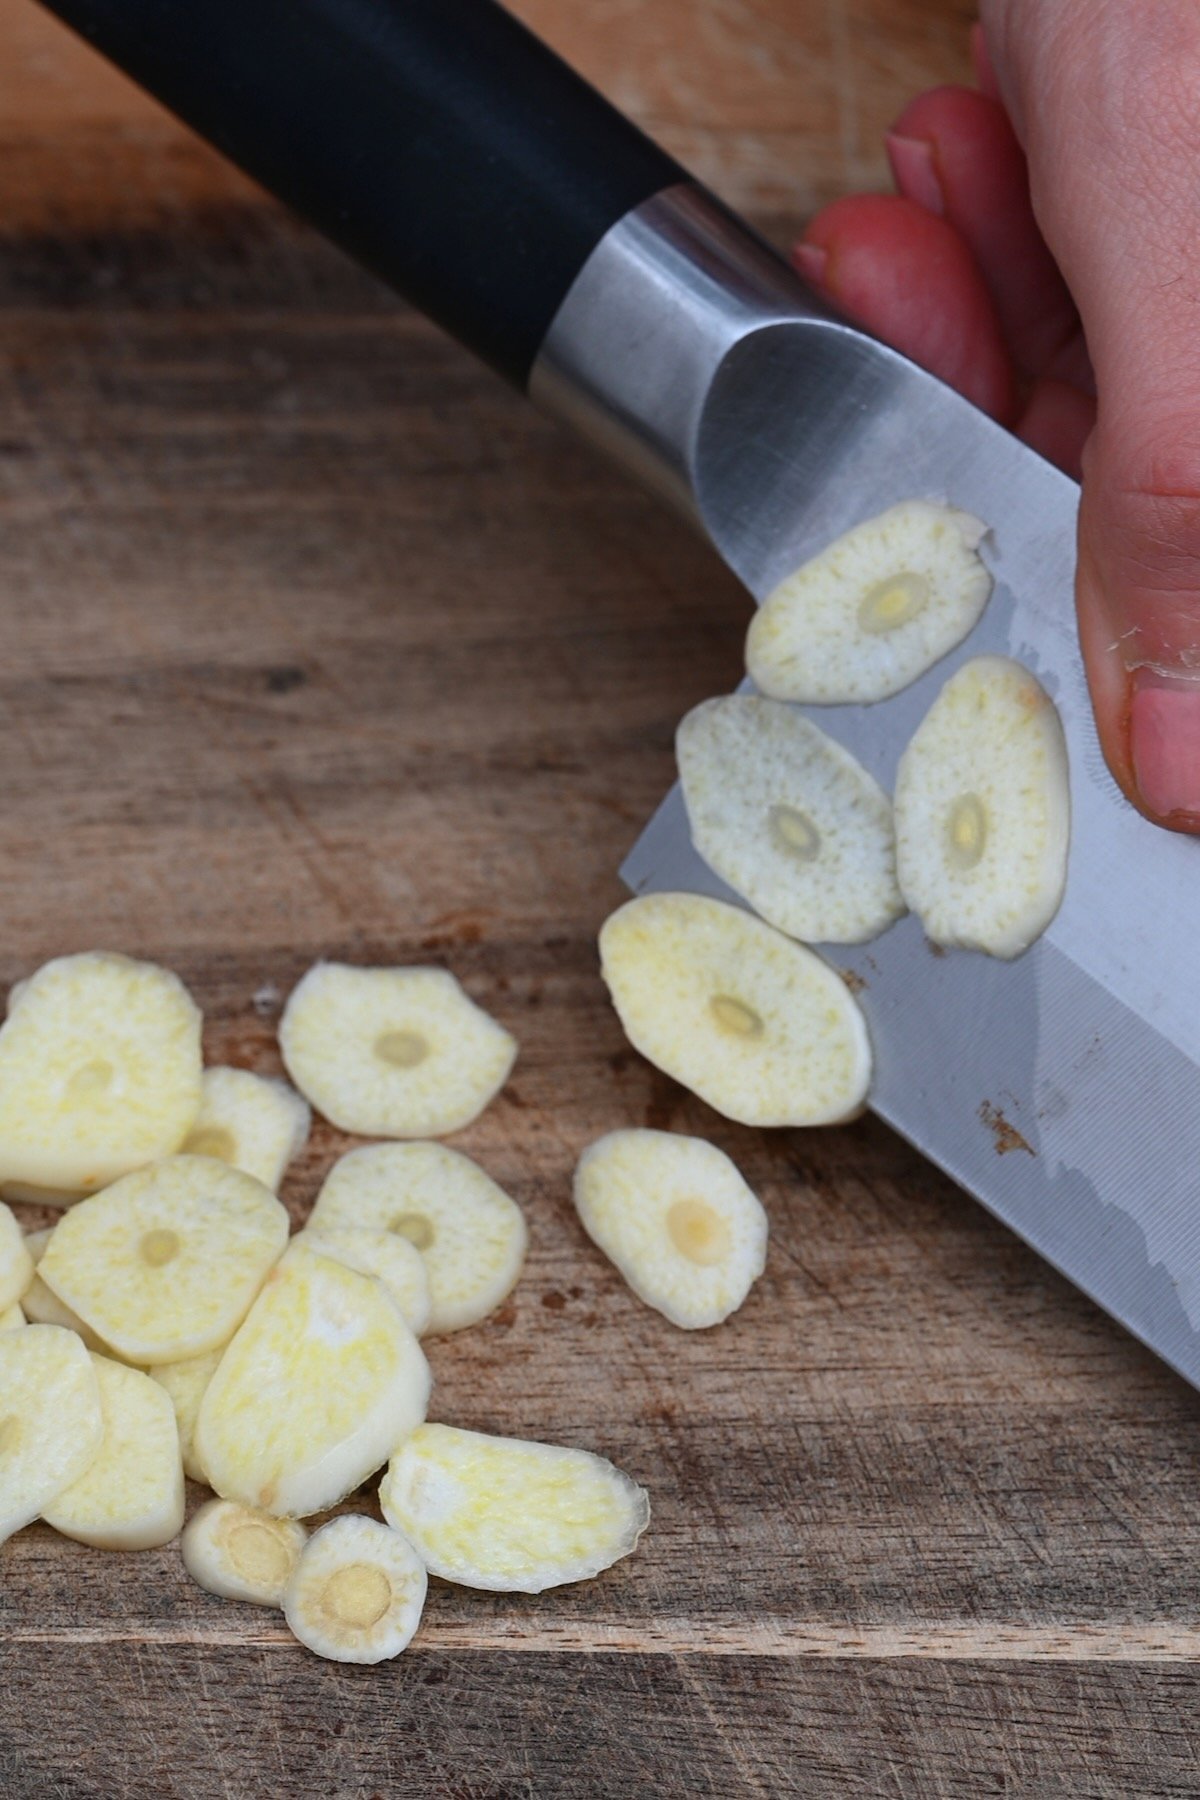 Slicing garlic with a knife